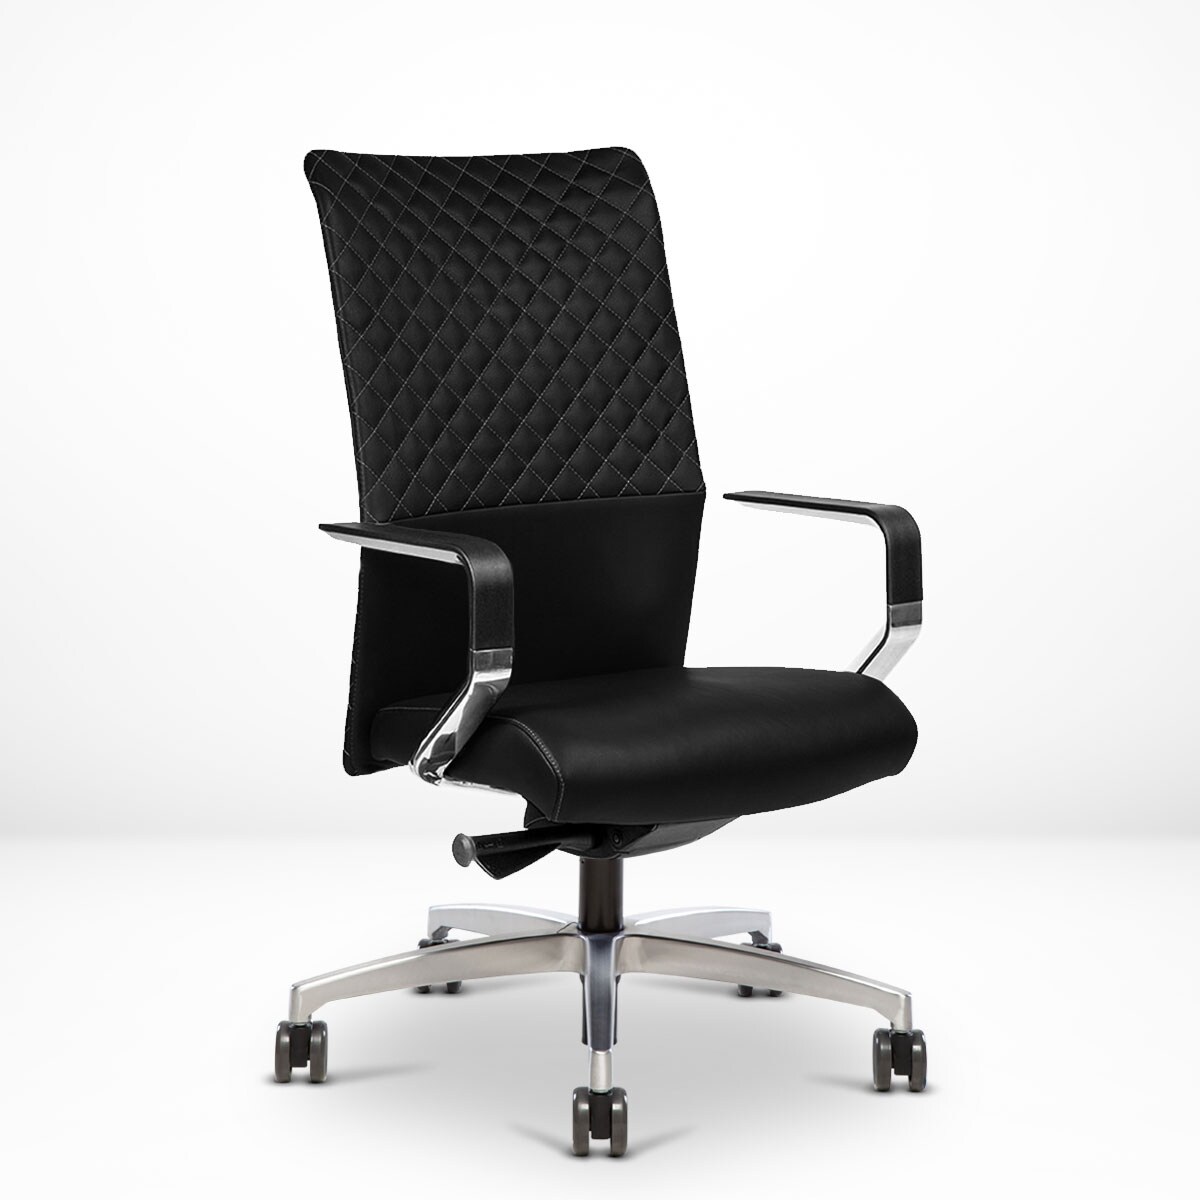 Via Seating Proform Diamond Hand-Stitched Executive Ergonomic Office Chair, Italian Leather and Polished Aluminum Frame, Black